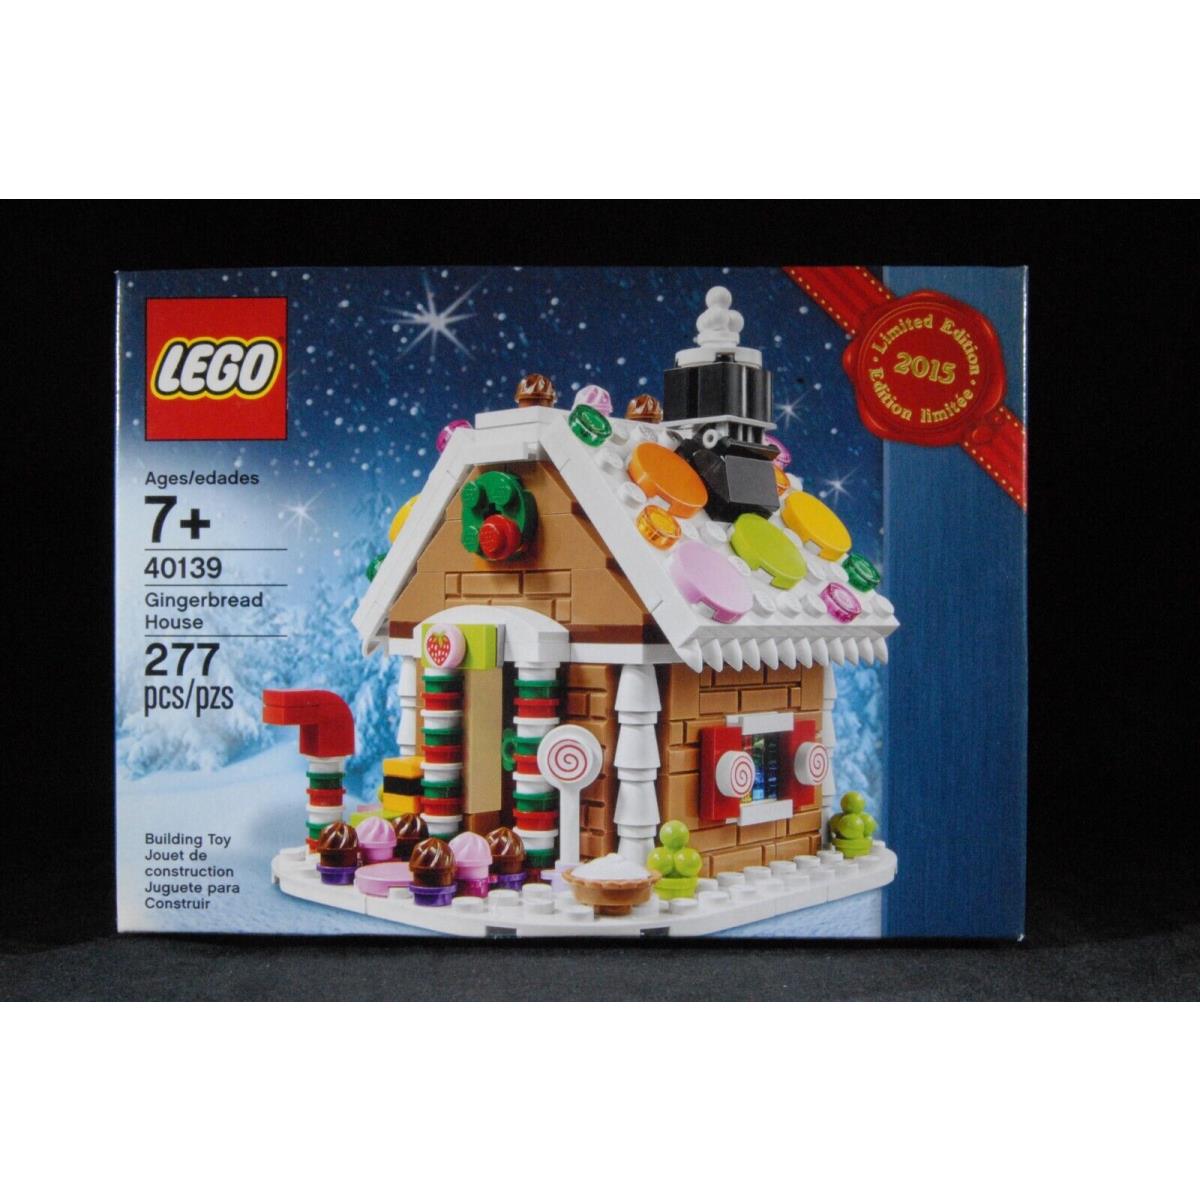 Lego Christmas Gingerbread House 40139 Retired